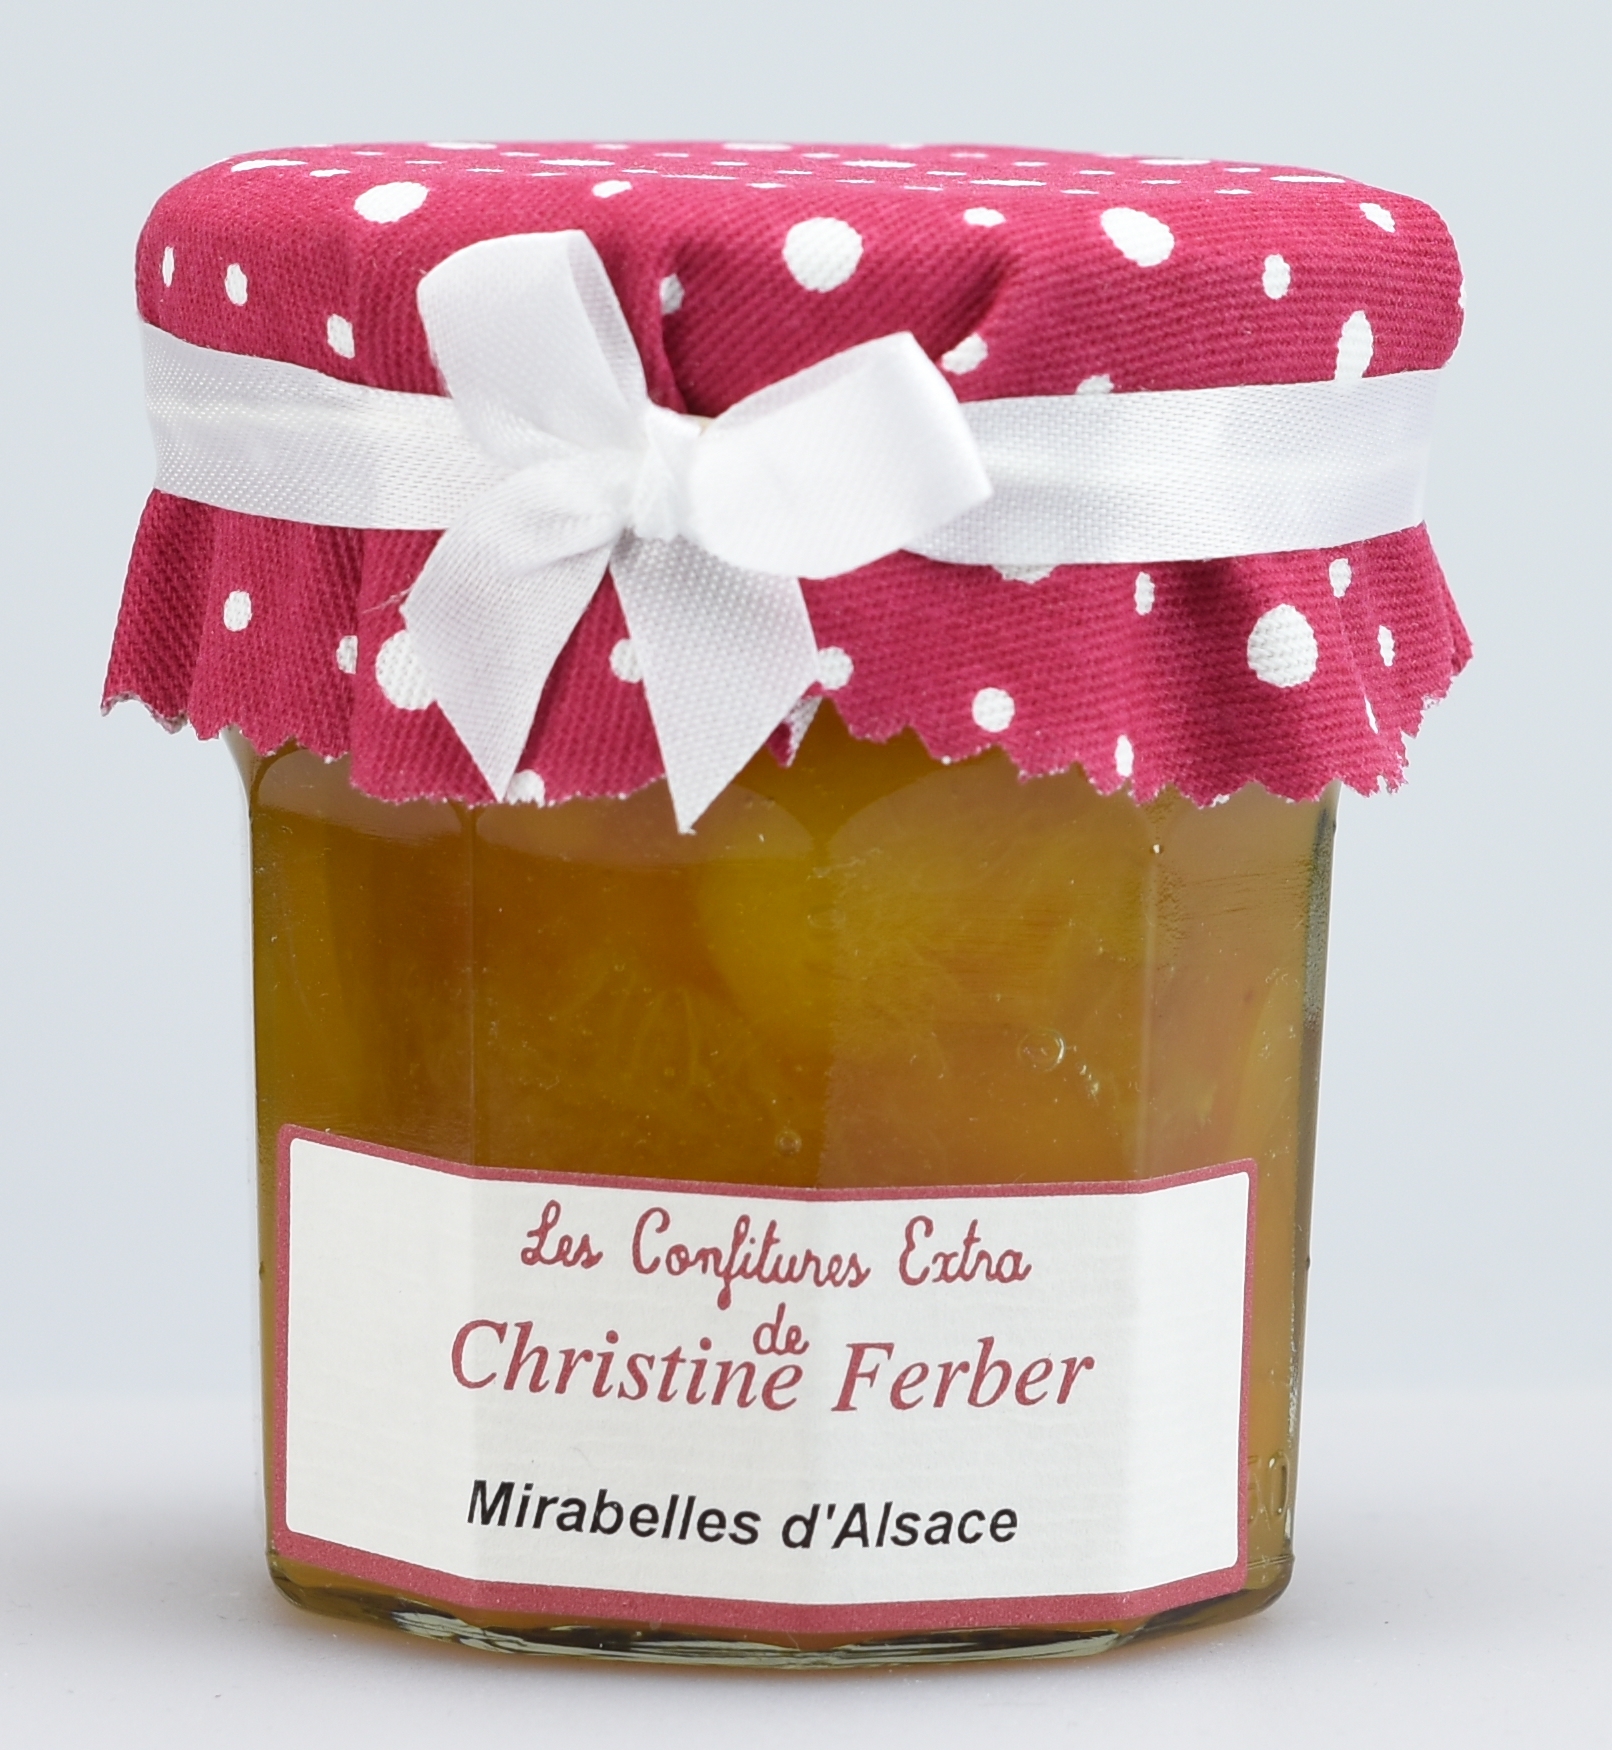 Mirabellen, Confiture extra, Mirabelle d'Alsace, Christine Ferber 0,22 kg